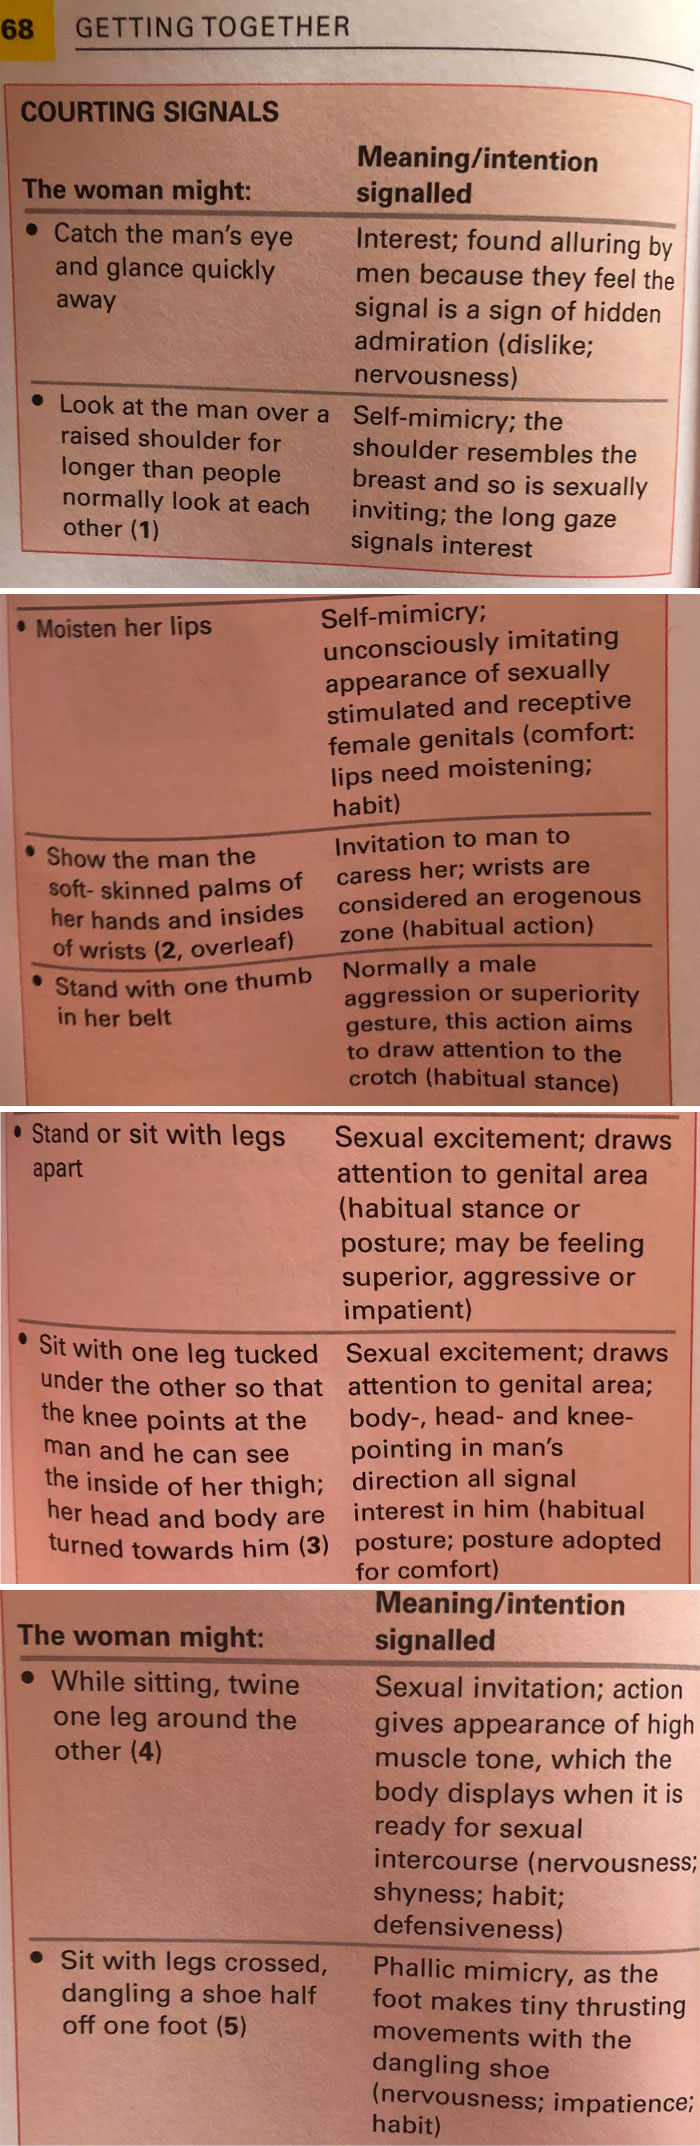 Careful Women, David Lambert’s Book On Body Language Is On To You